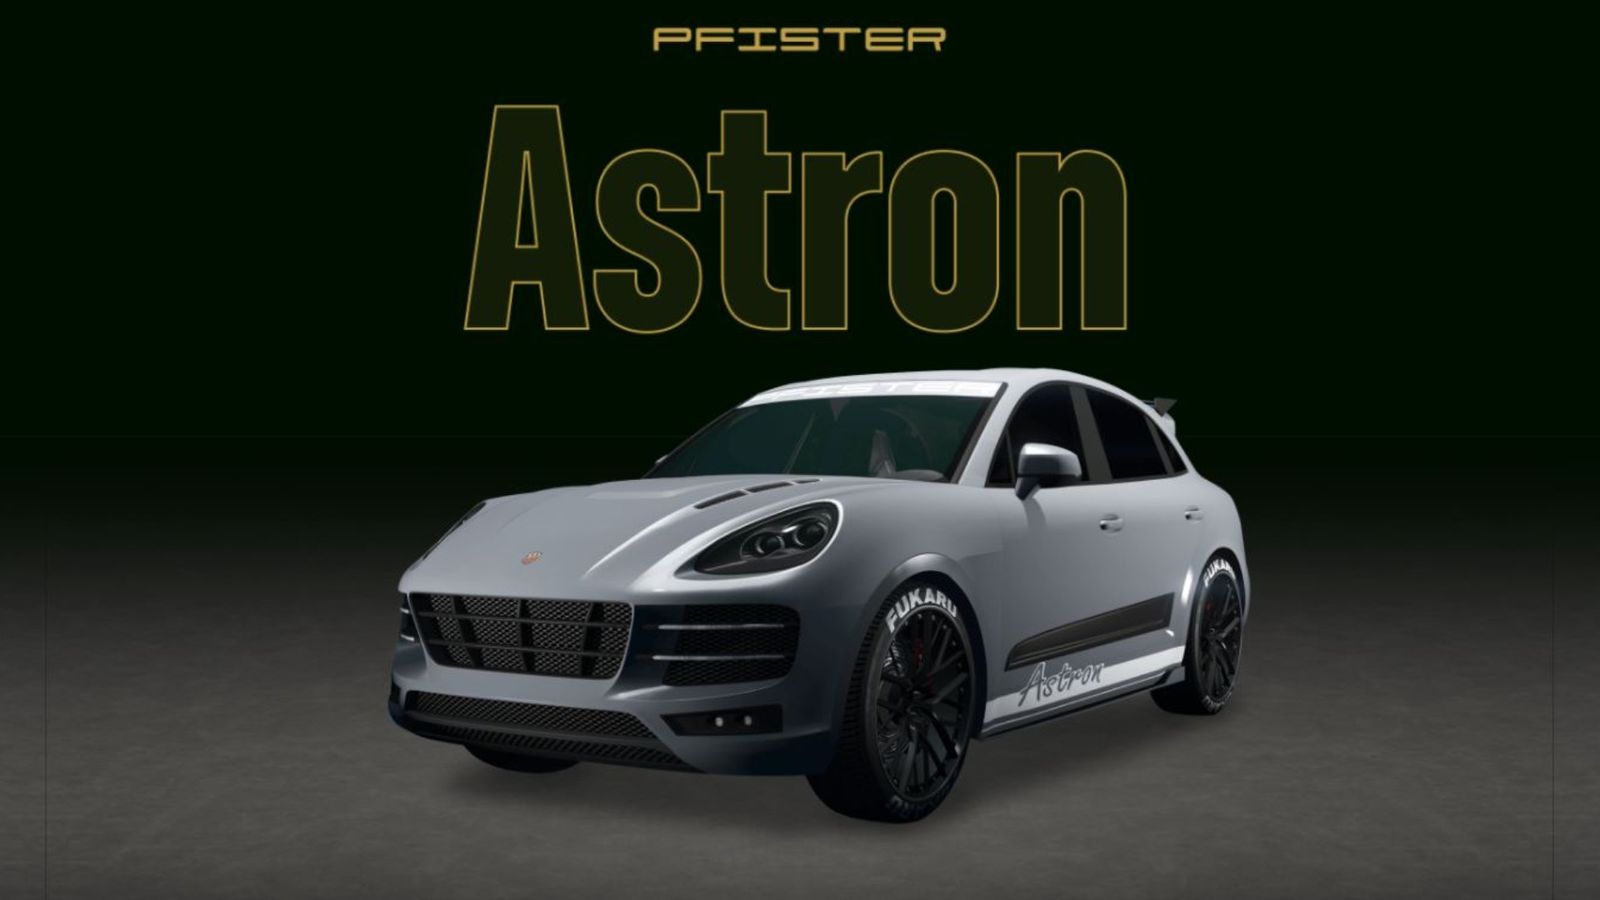 GTA Online Pfister Astron in light silver